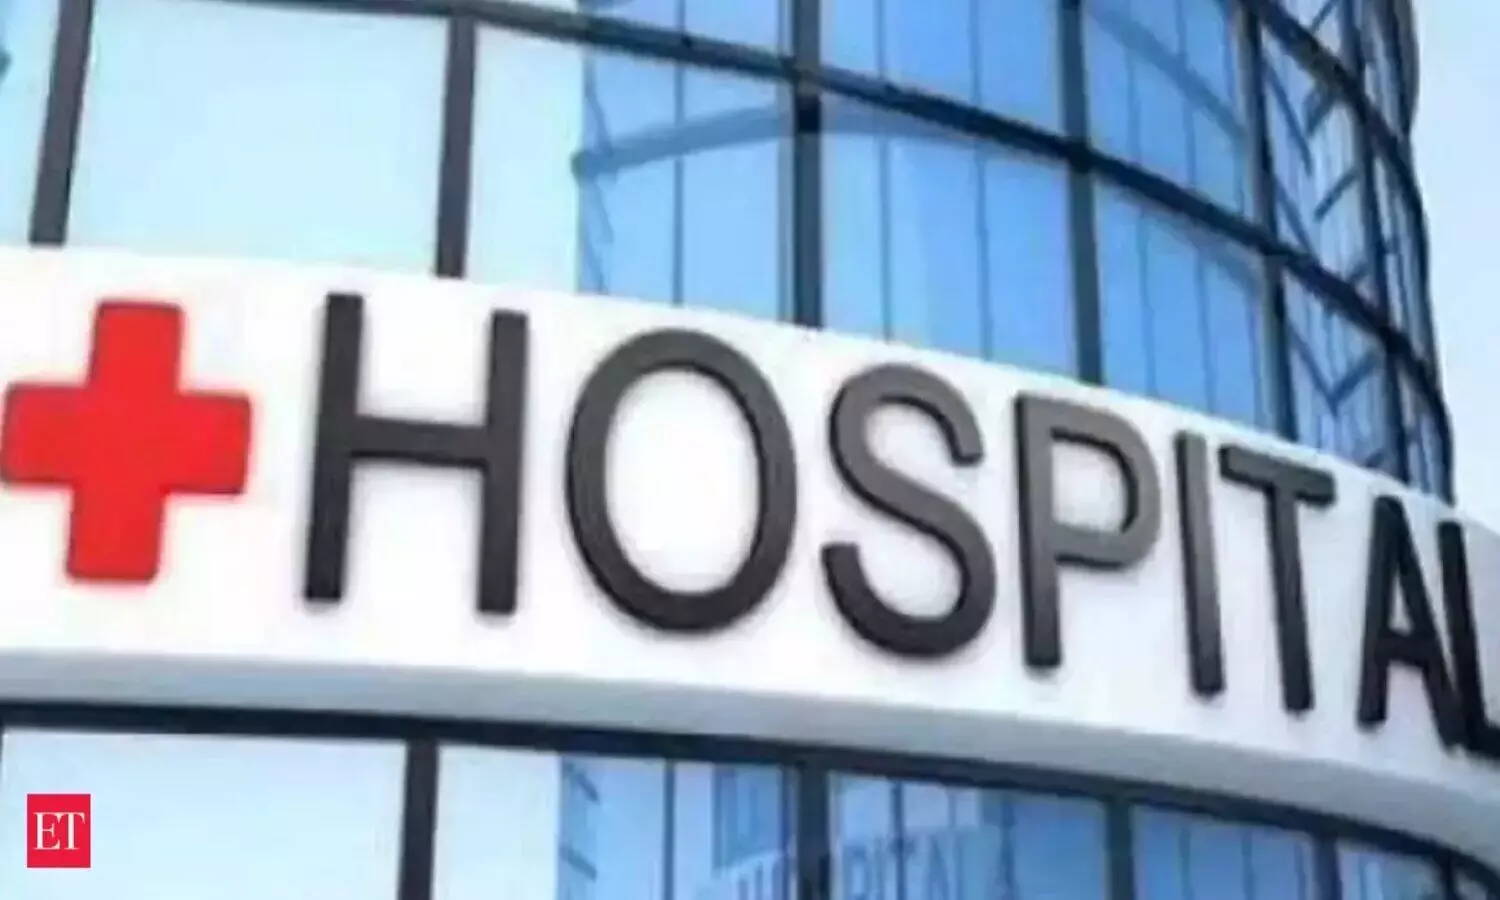 Unnao 21 private hospital canceled registration